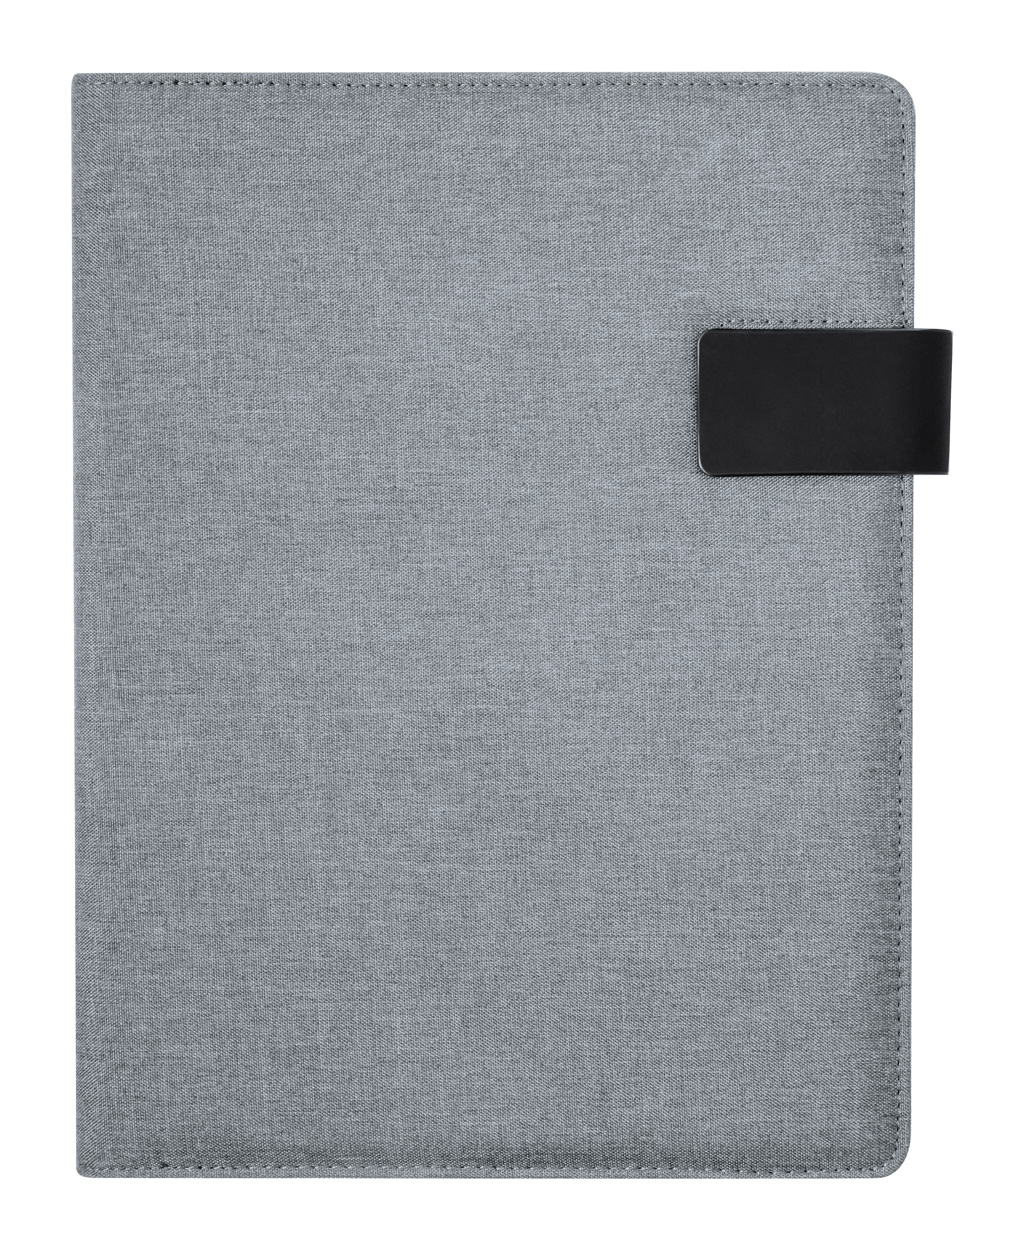 Linnoa style for documents - grey